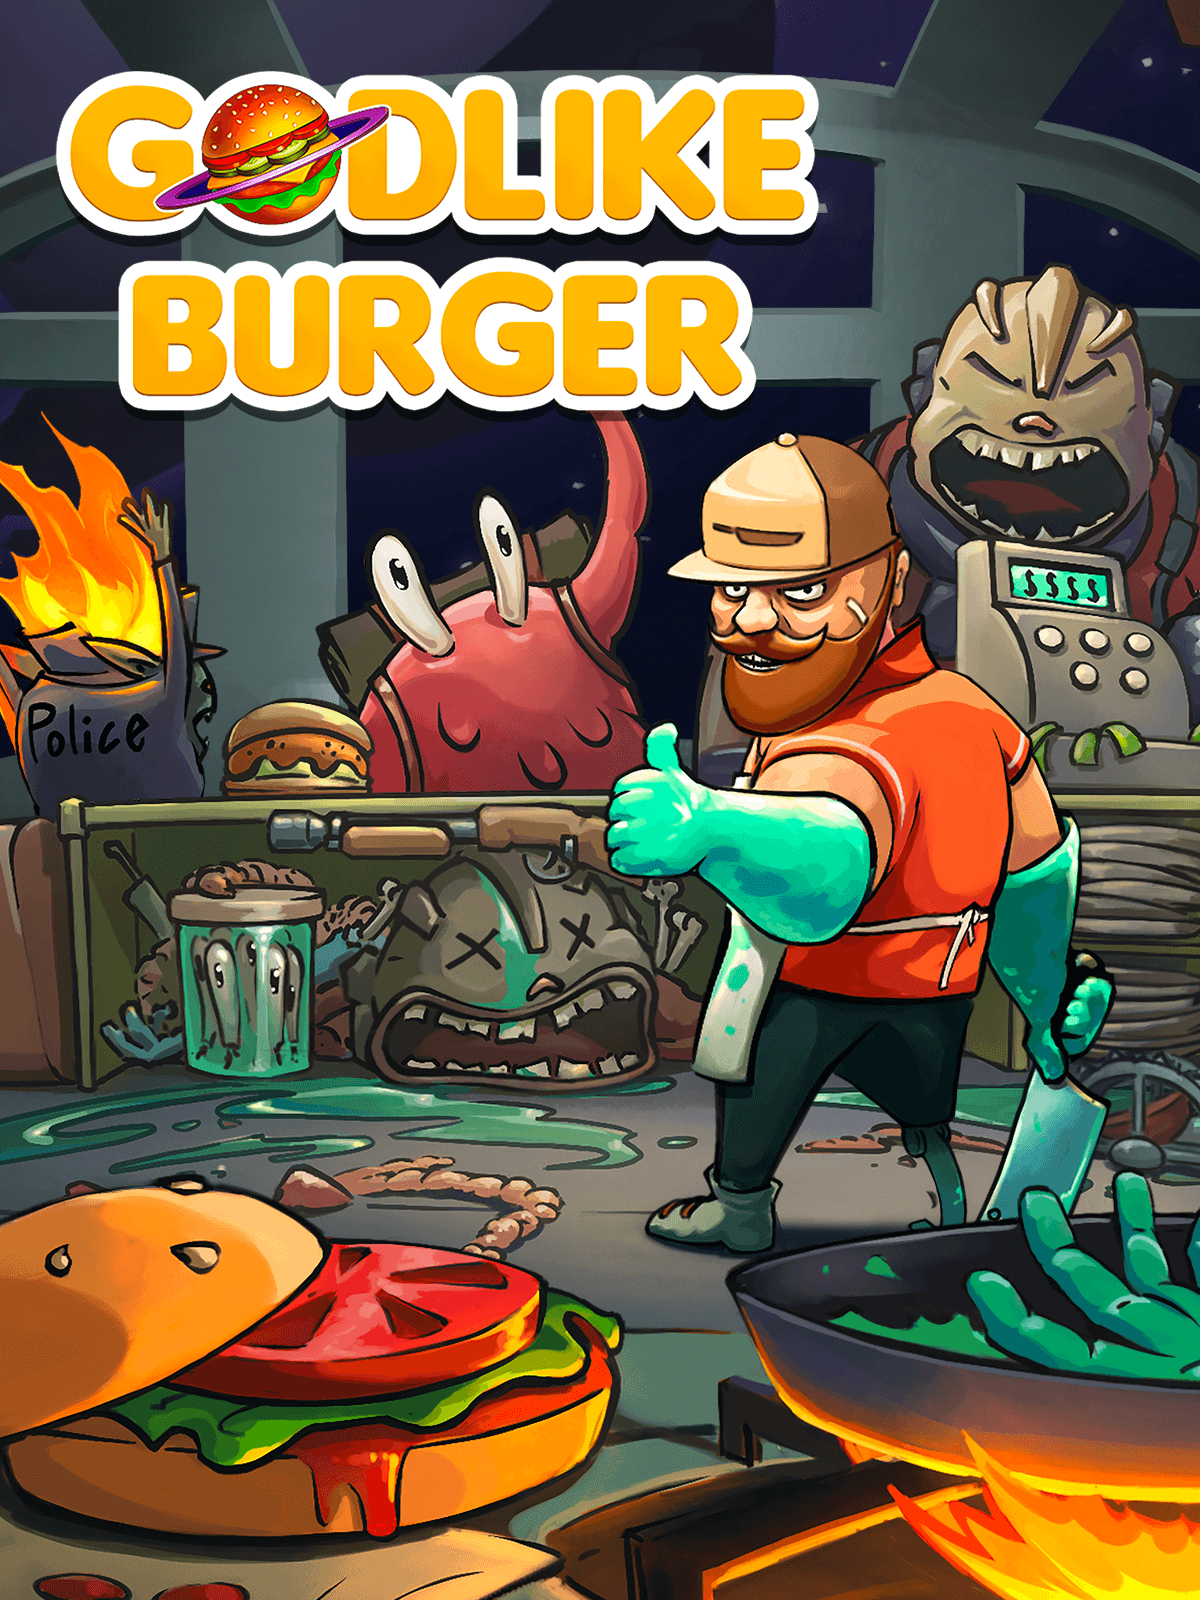 Godlike Burger von Daedalic Entertainment